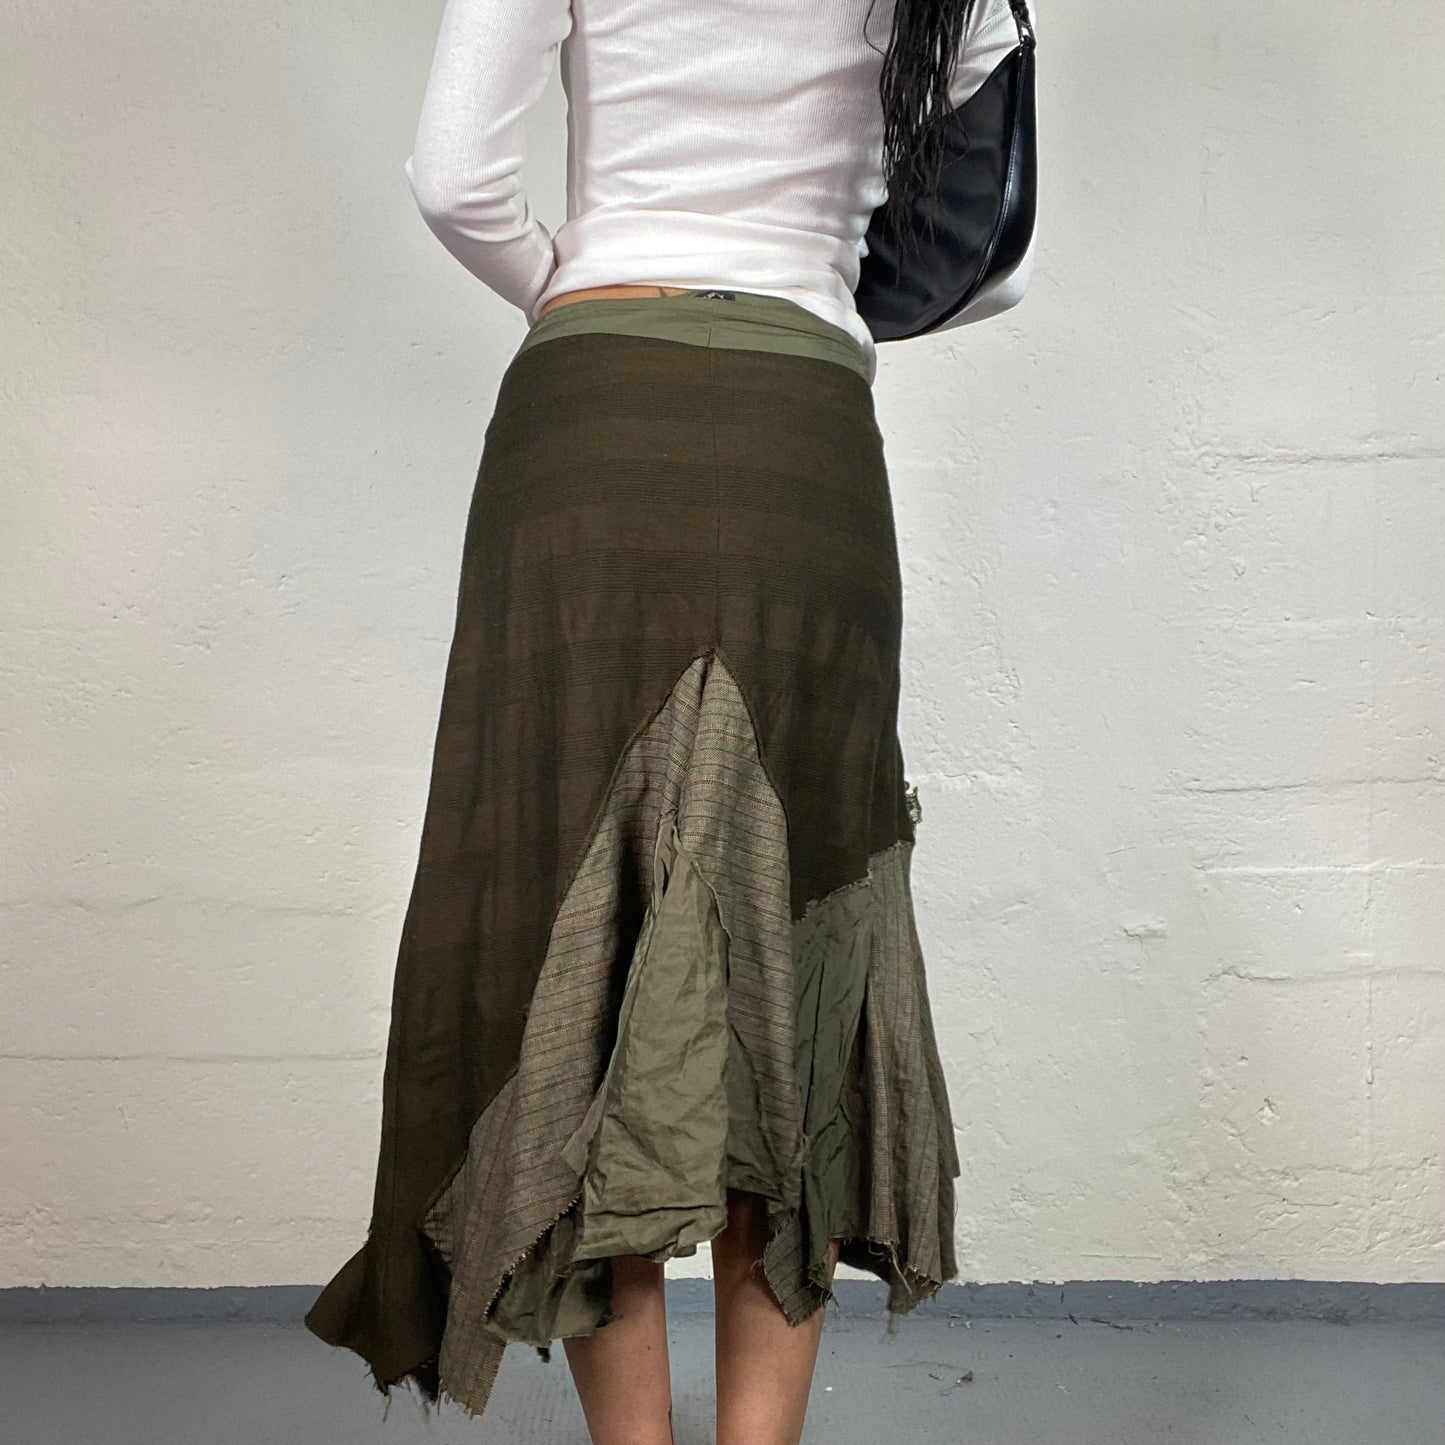 Vintage 2000's Boho Girl Khaki Green Maxi Skirt with Rose Detail Embroidery and Asymmetric Trim (S)